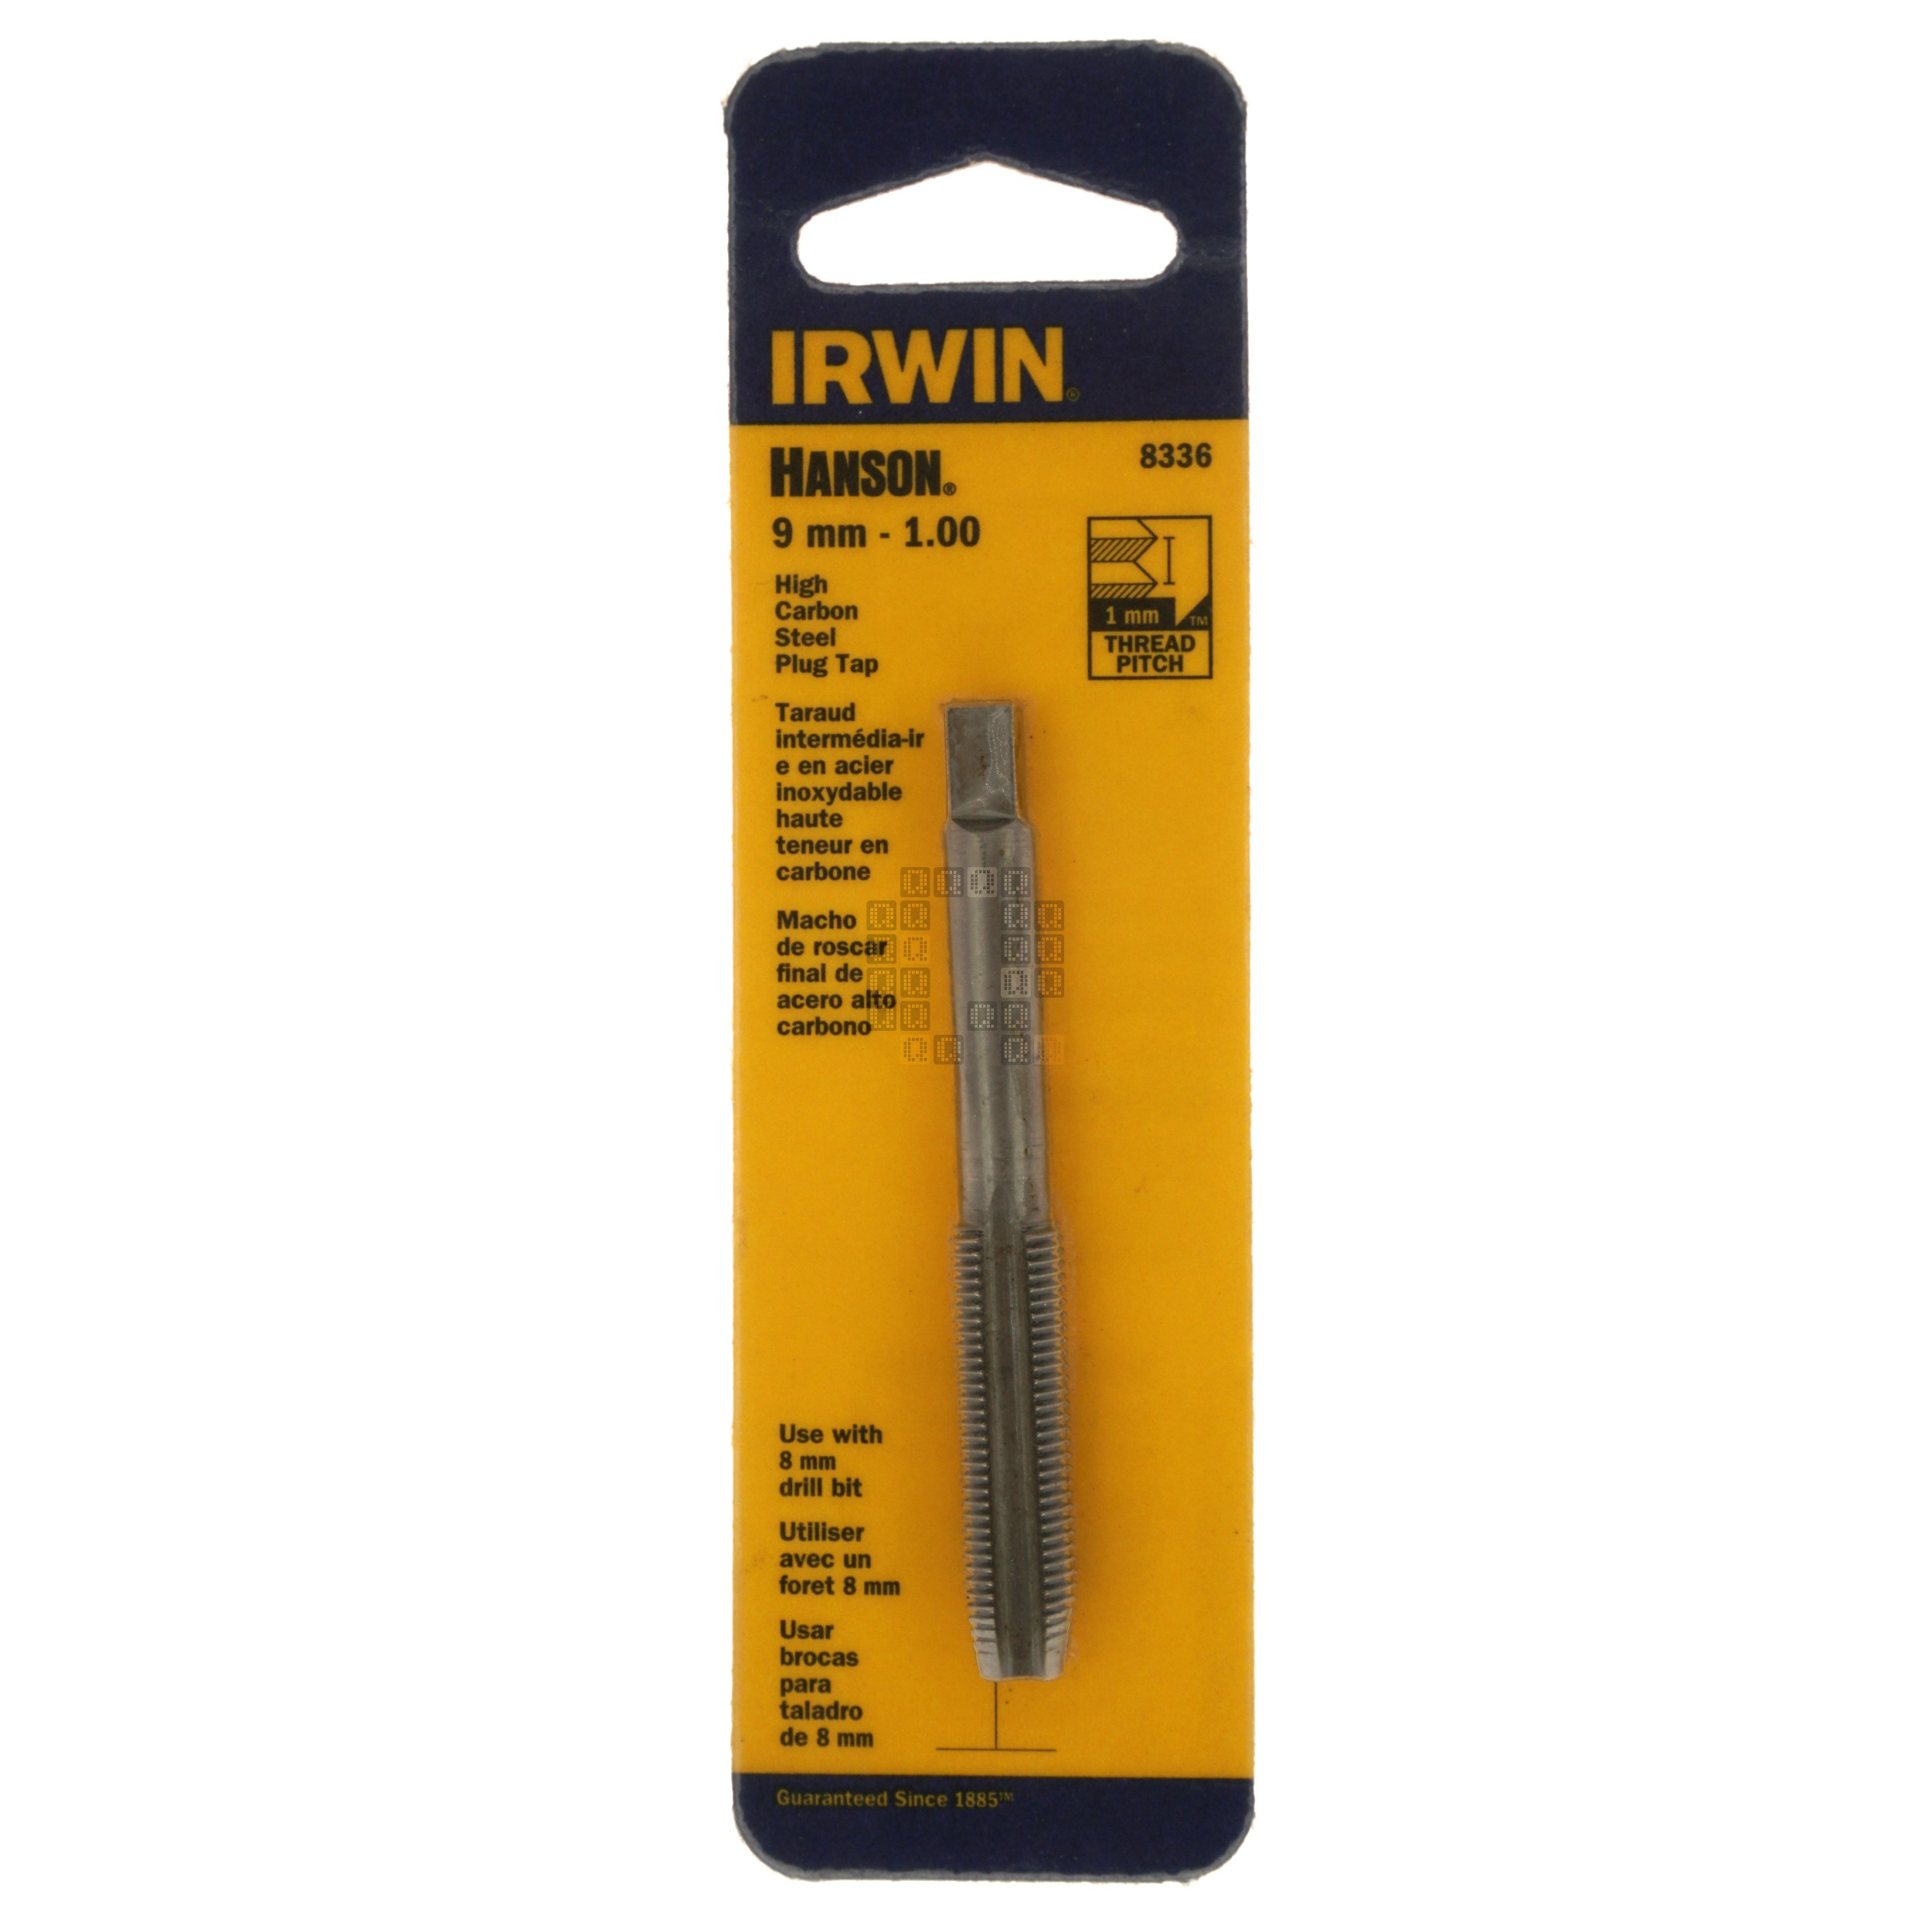 Irwin Hanson 8336 9mm-1.00 High Carbon Steel Plug Tap, M9-1.00